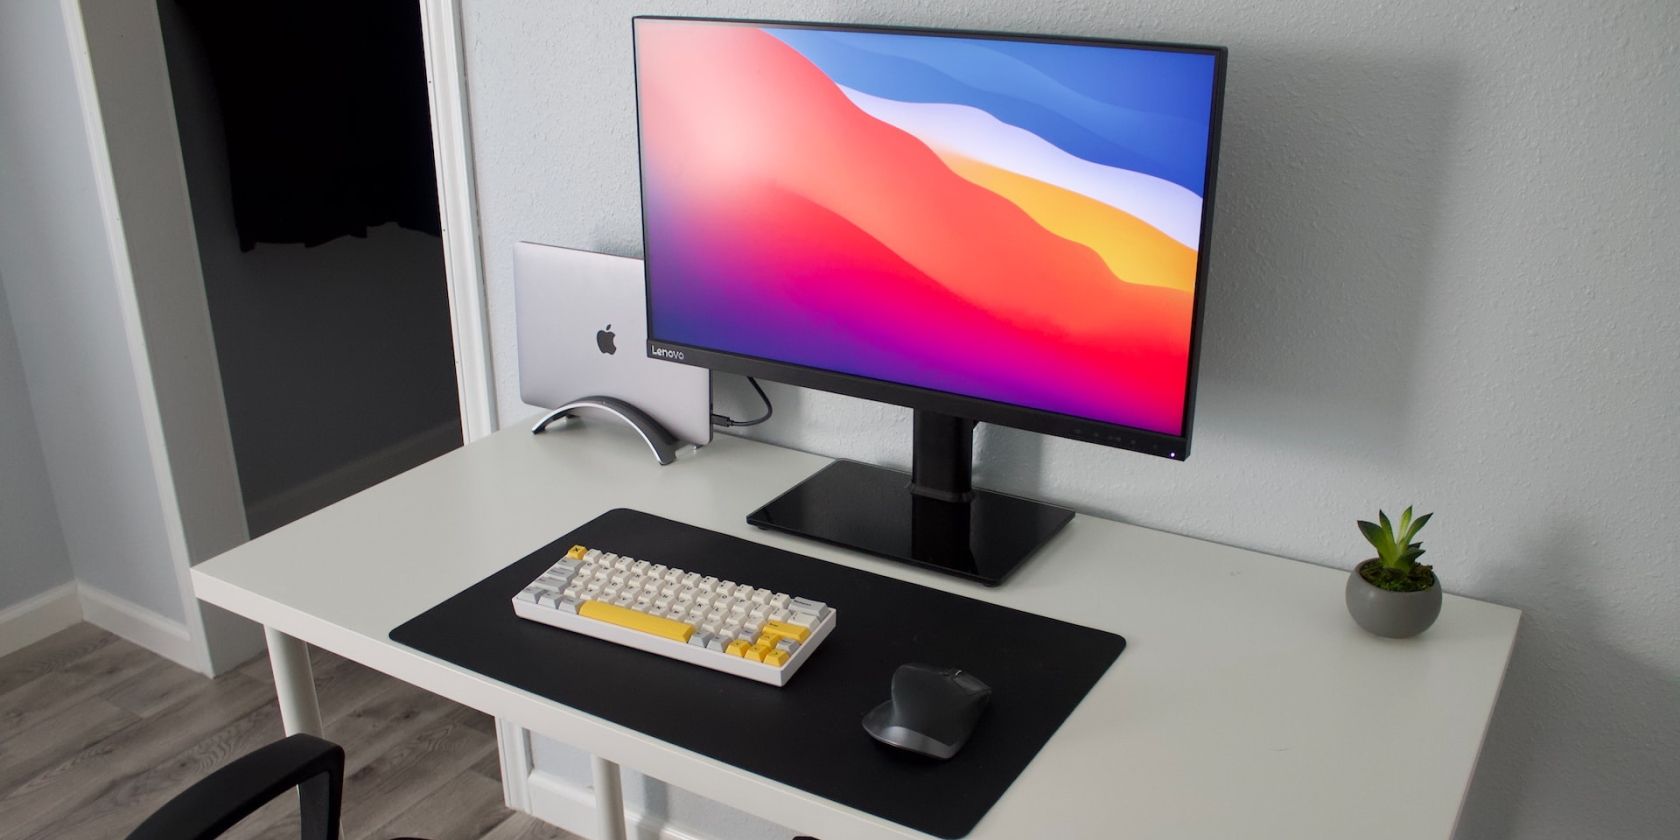 Logitech Mx mouse on a desk with a MacBook